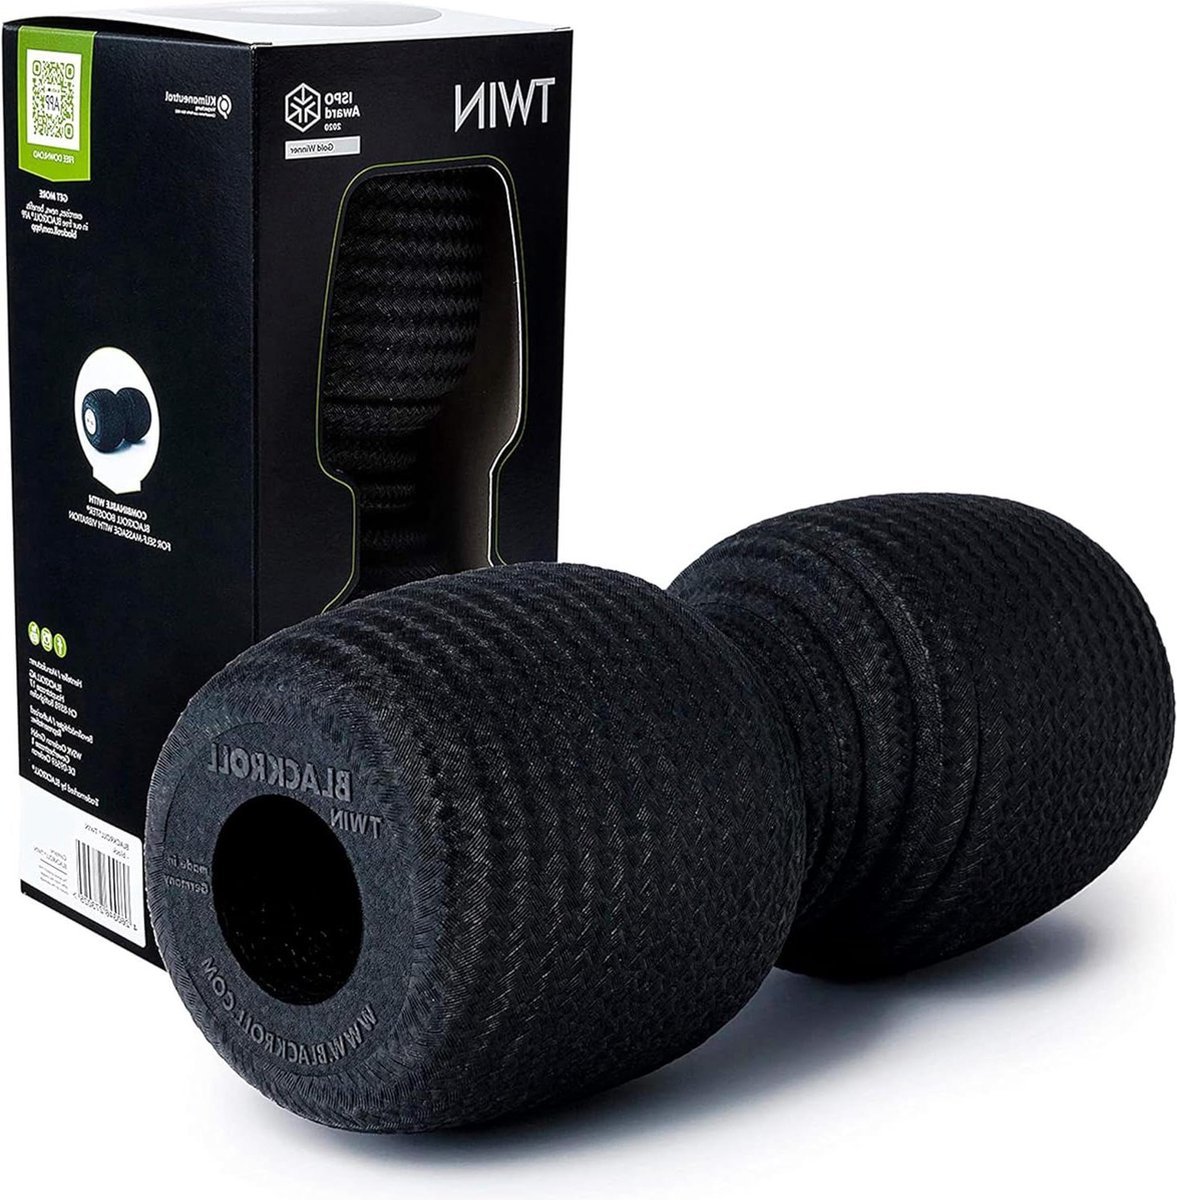 TWIN foamroller voor stimulerende zelfmassage - lange rugspieren en kuiten - triggerpoint massage - 30 x 13 cm zwart stretching foam roller